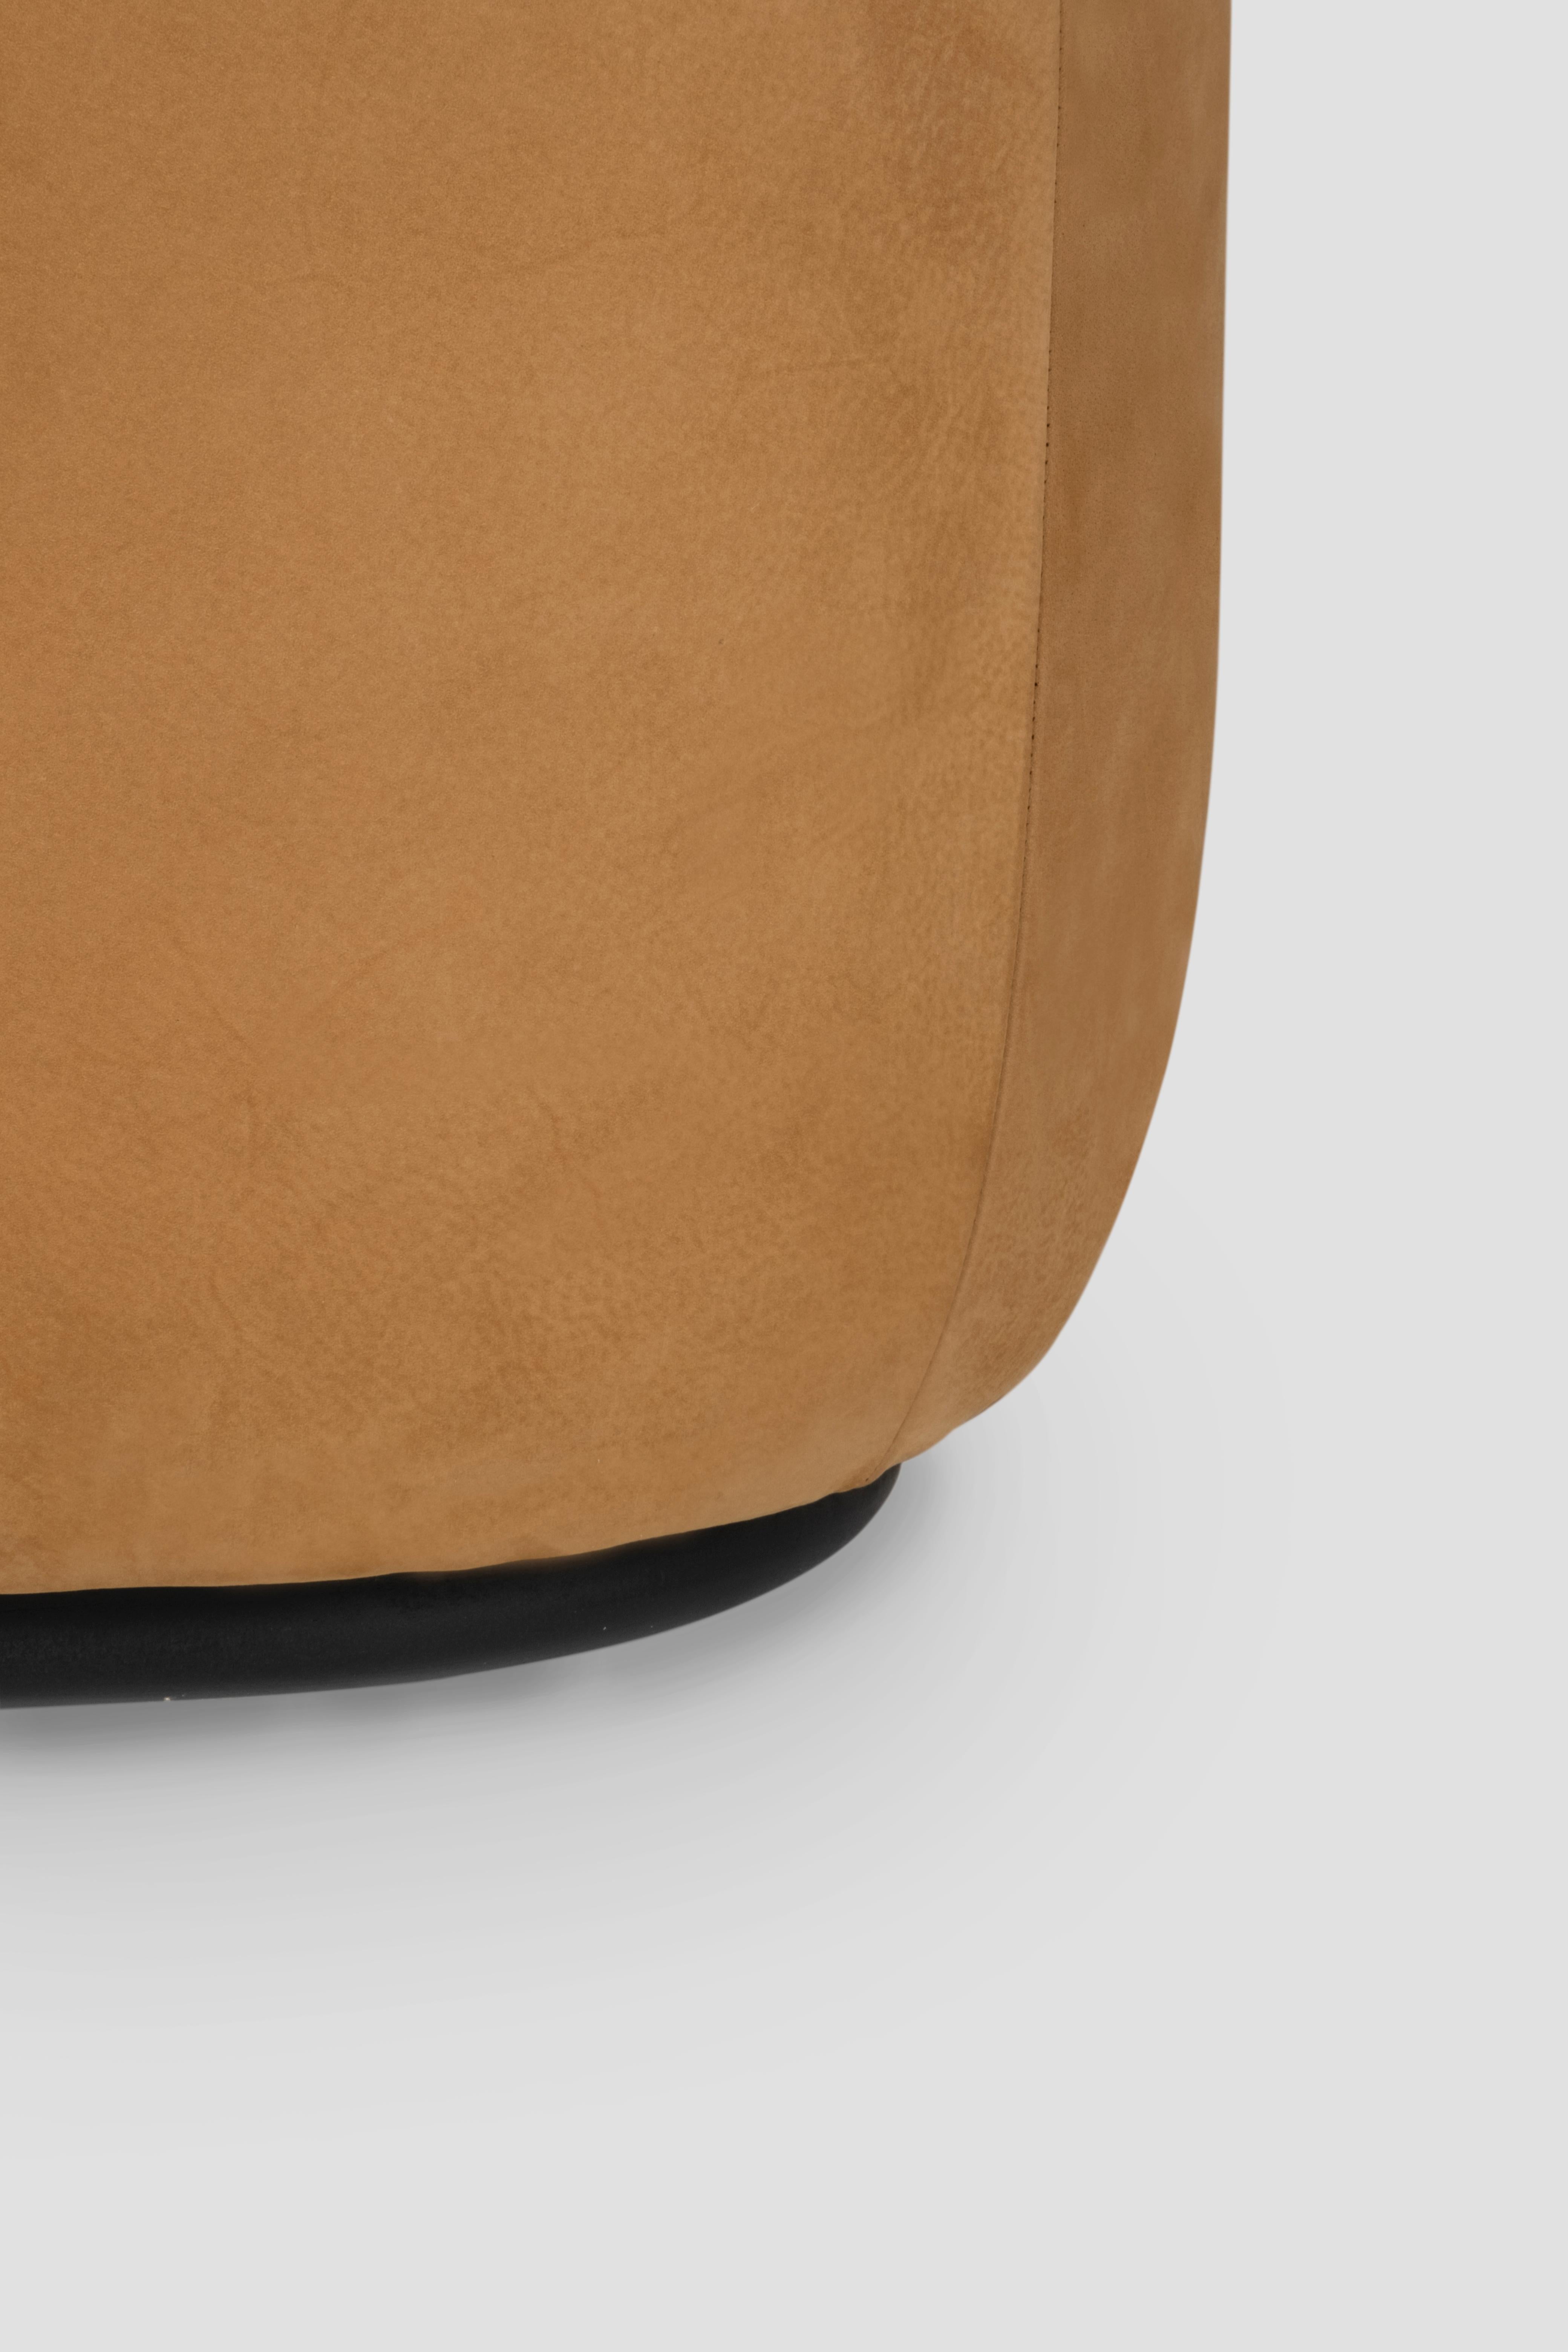 Fait main Pouf Capri moderne Caramel Nubuck Leather Handmade Portugal par Greenapple en vente